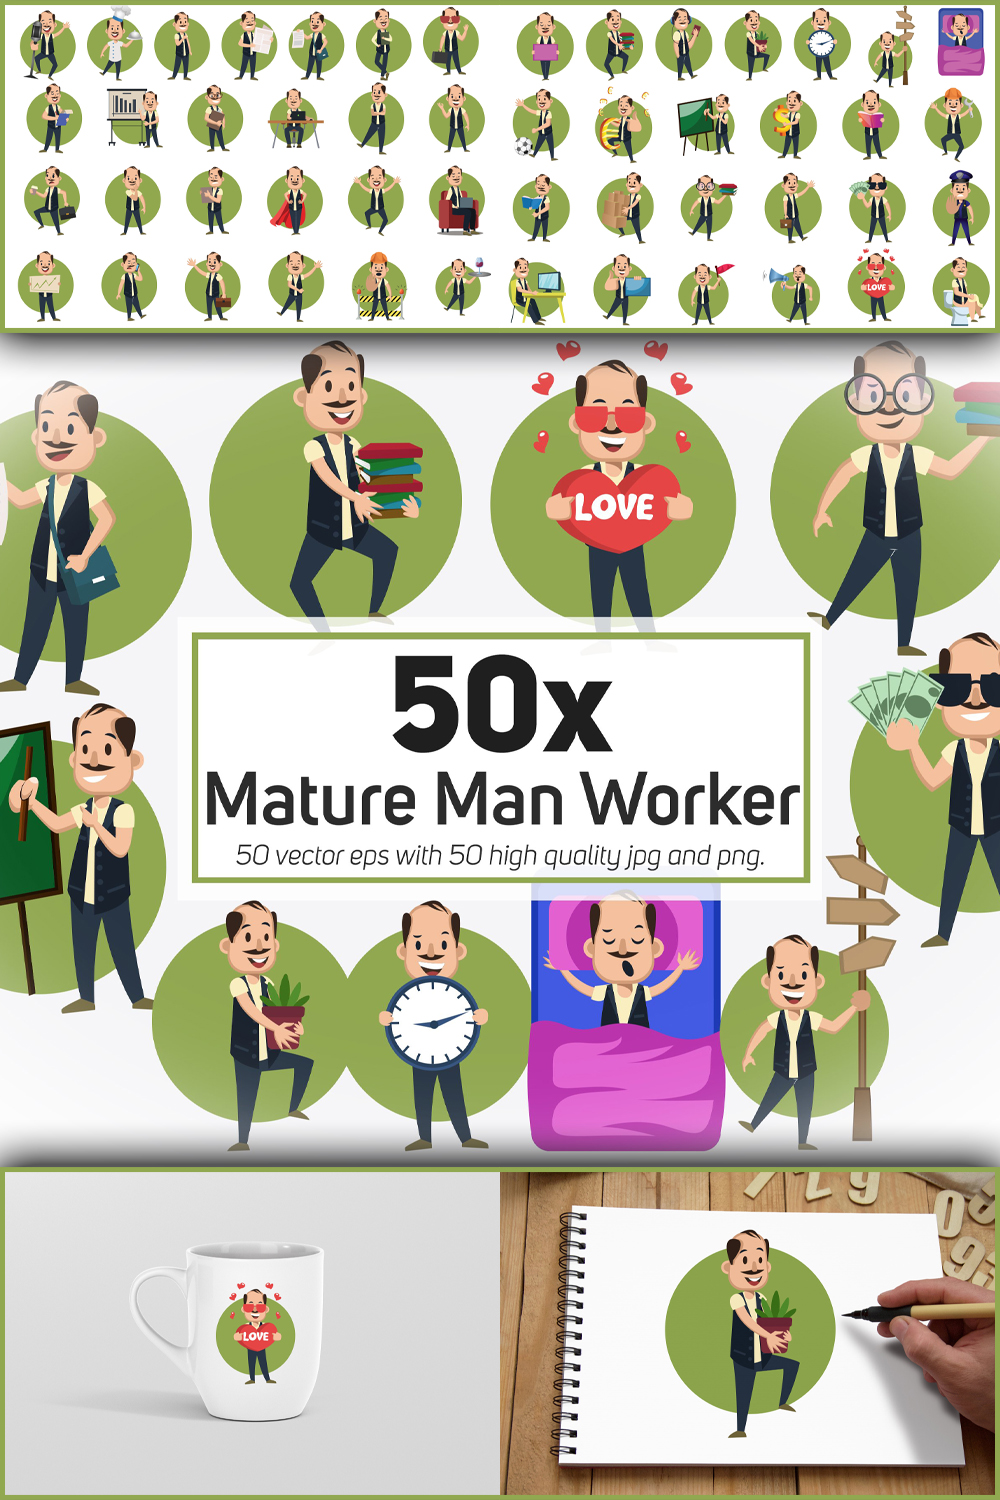 541832 50x mature man worker and businessman collection pinterest 1000 1500 15